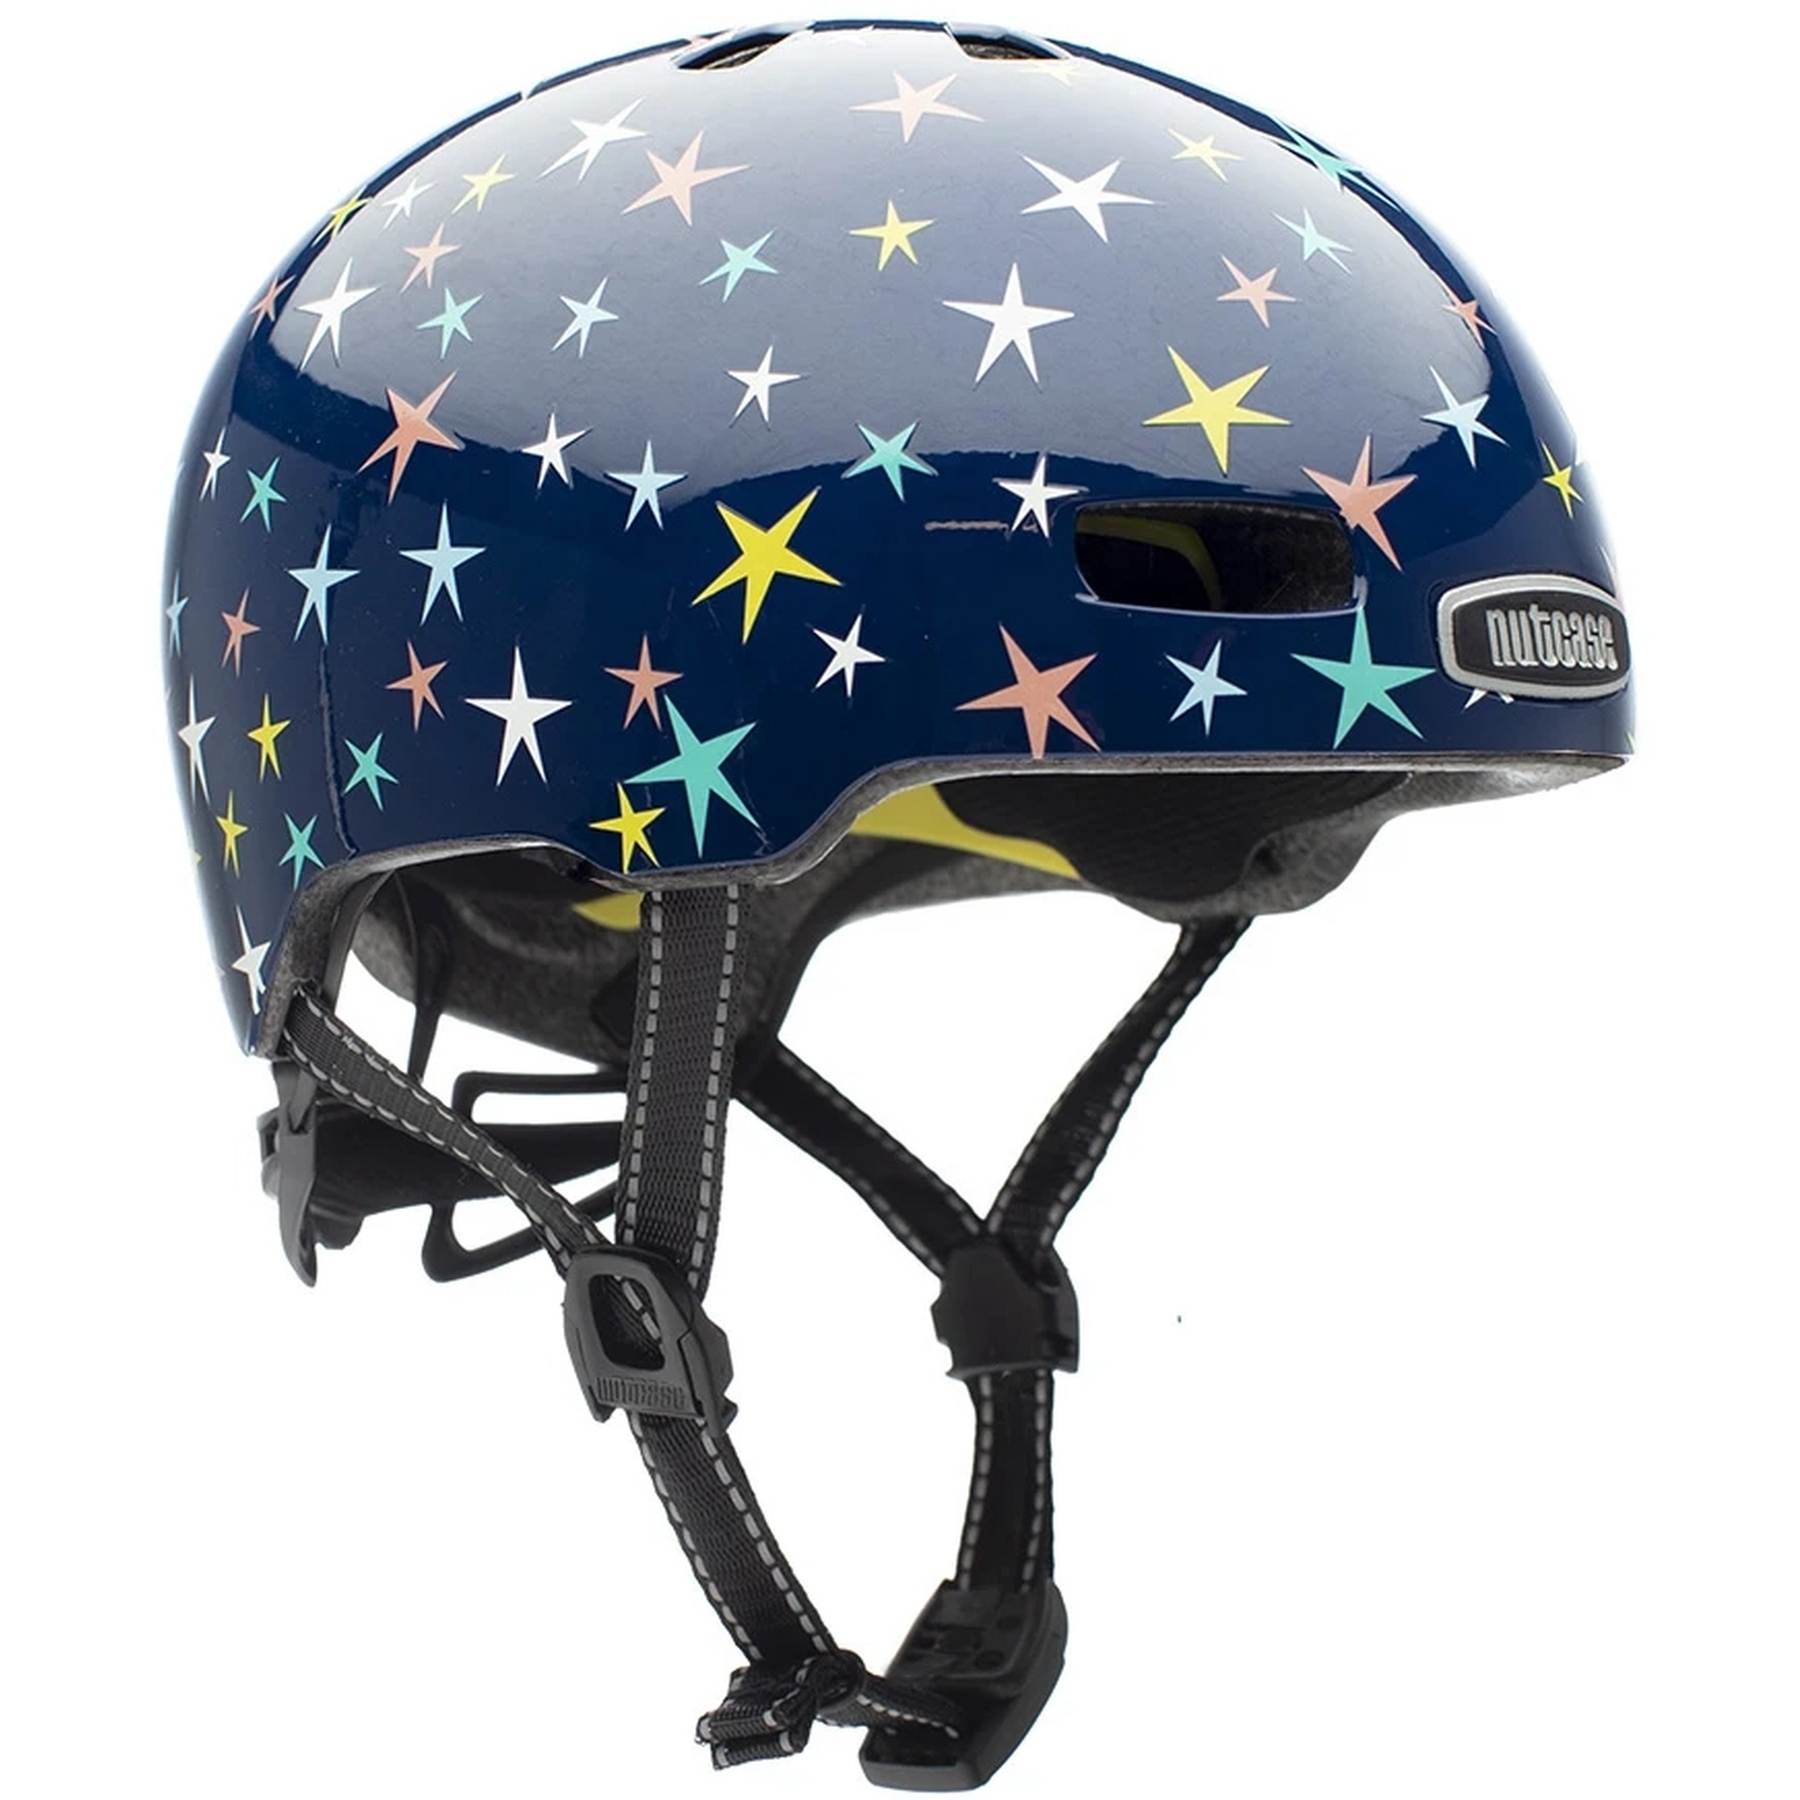 Productfoto van Nutcase Little Nutty MIPS Kids Helmet - Stars are Born Gloss